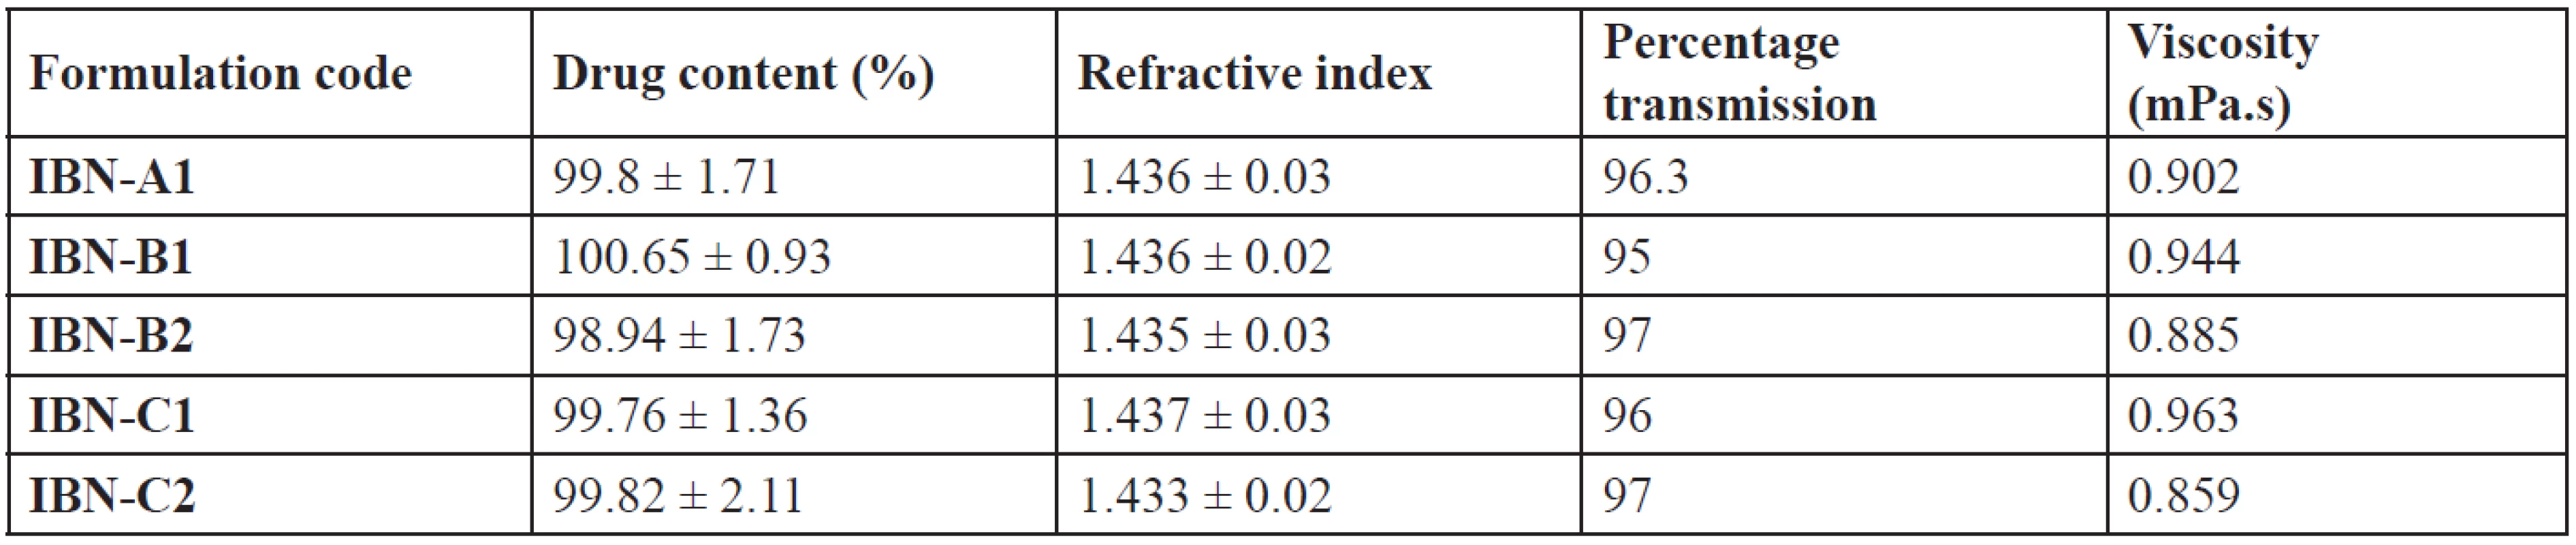 Drug content, refractive index, percentage transmission and viscosity of IBN SEDDS